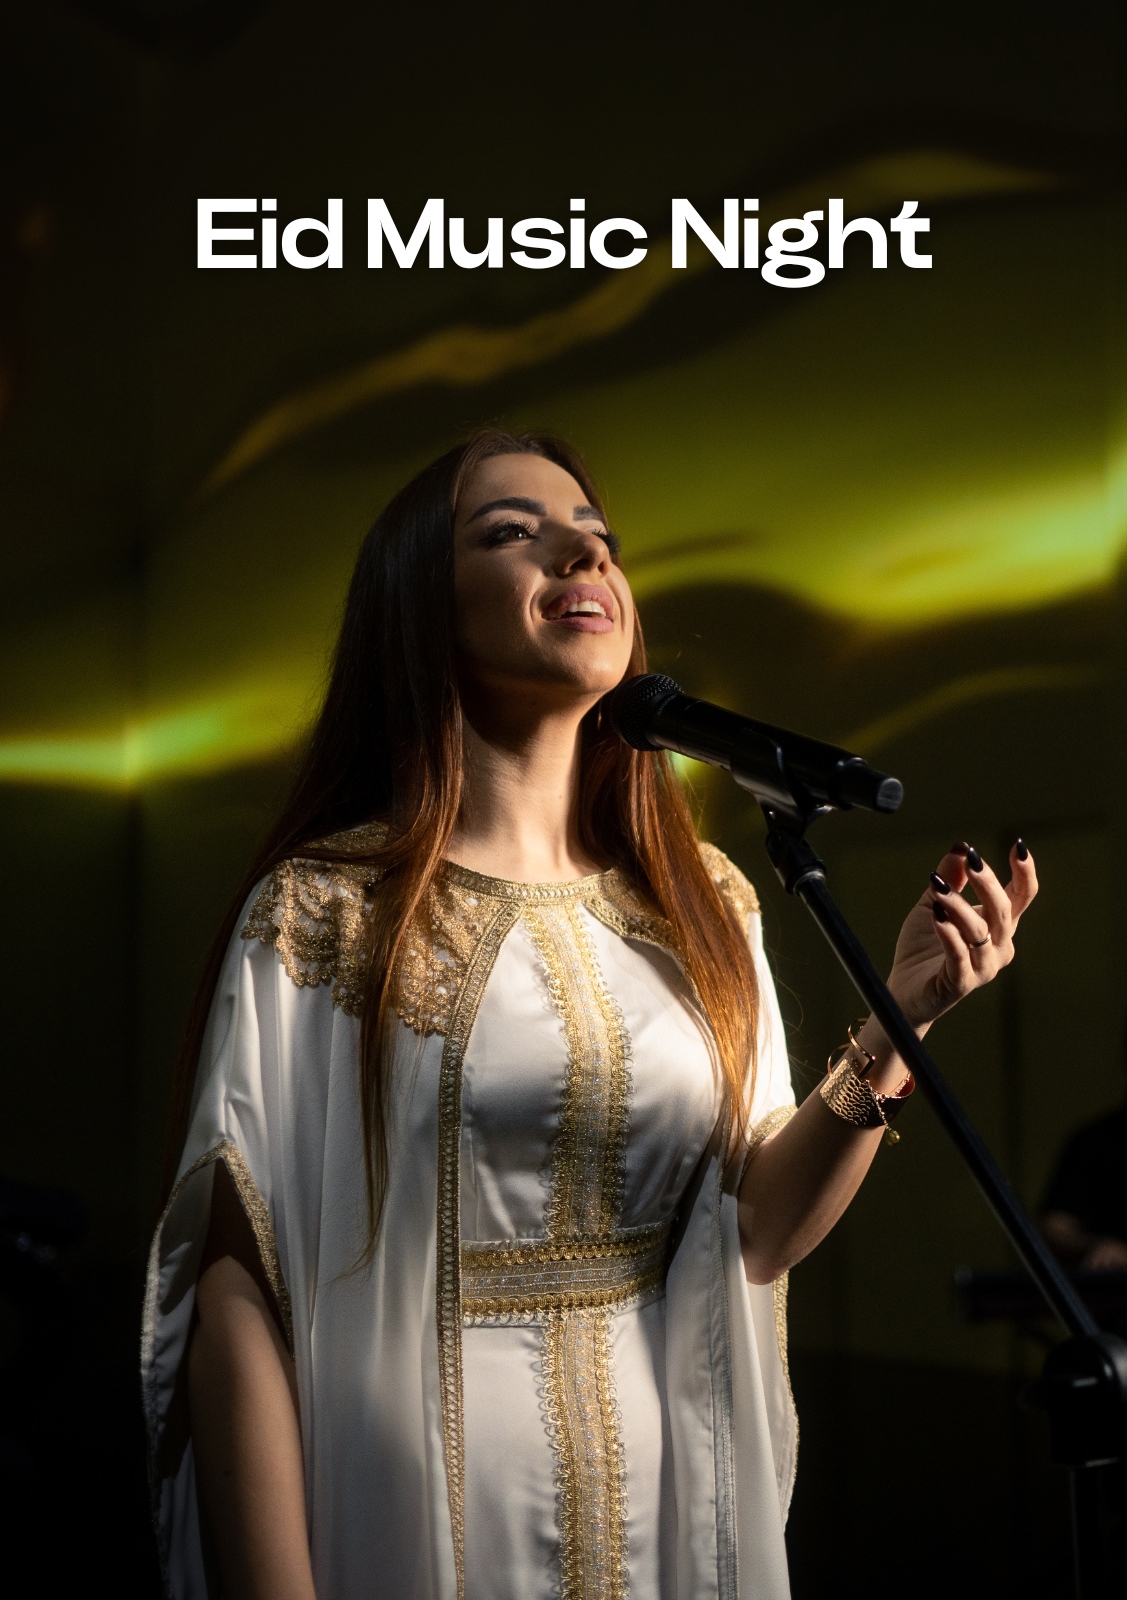 Eid Music Night